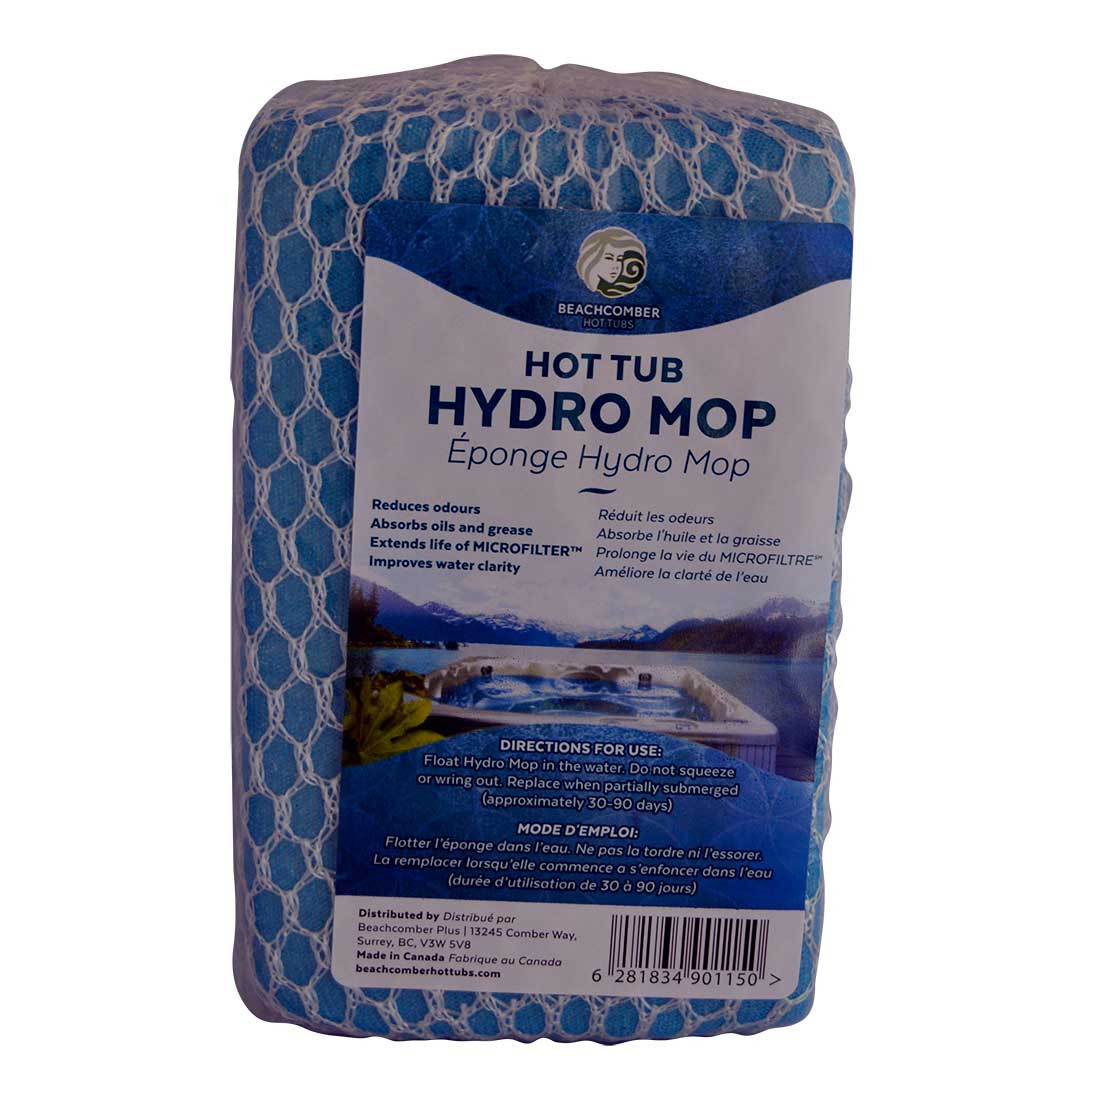 hydro mop swimming pool supplies